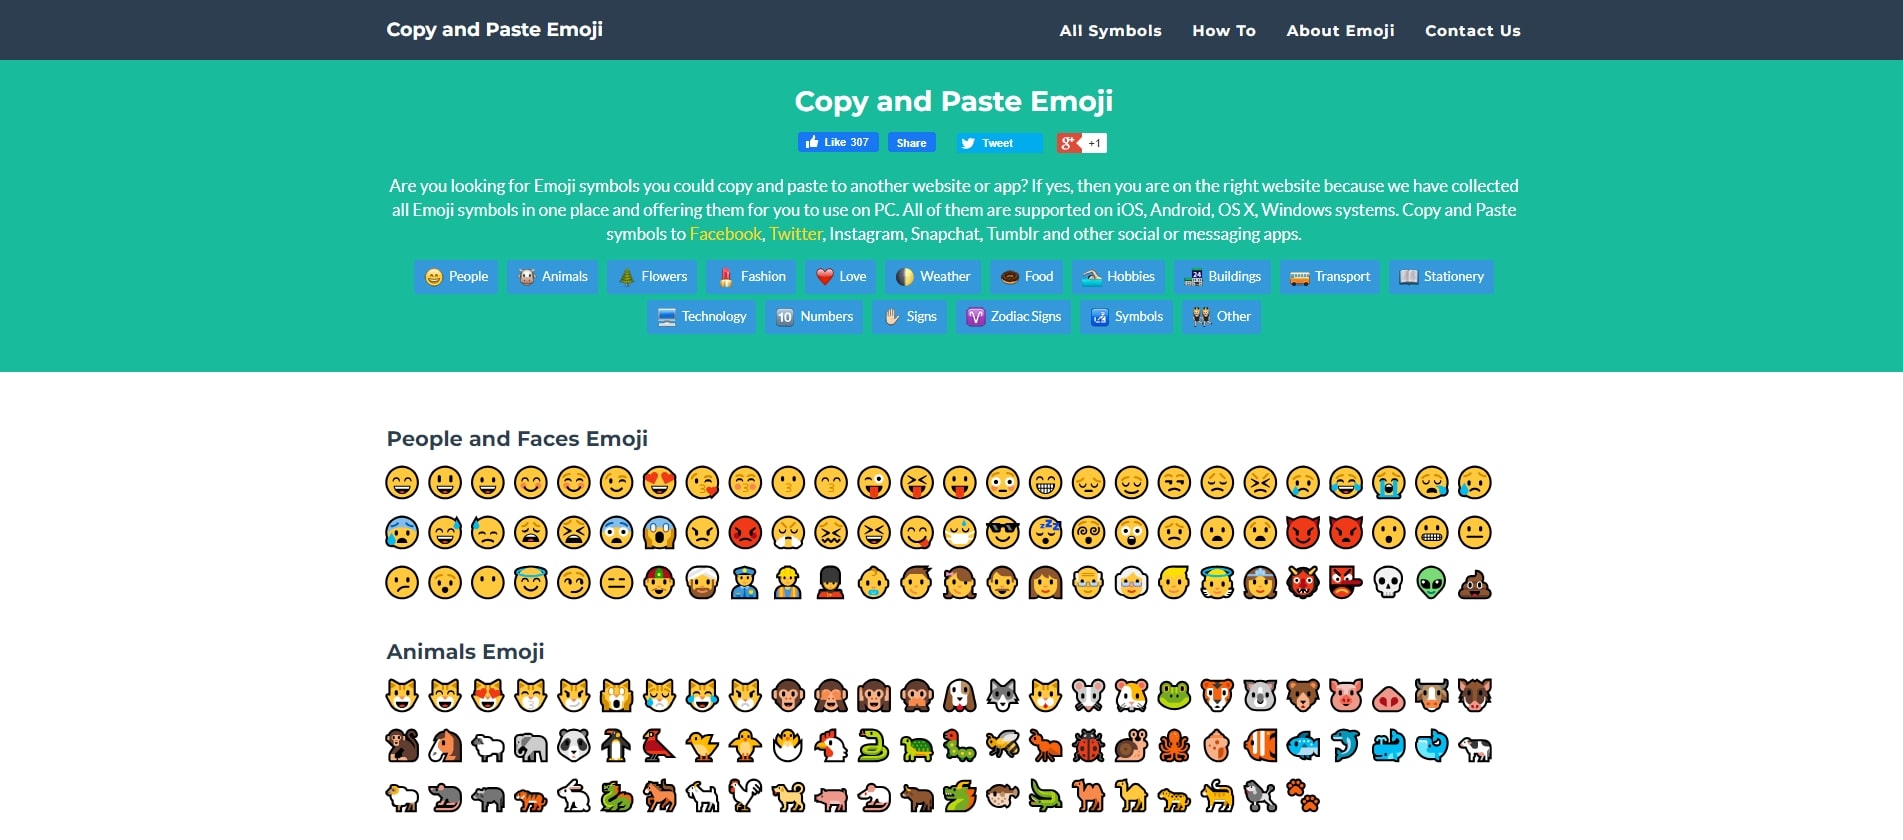 Copy and Paste Emoji 홈페이지 메인화면